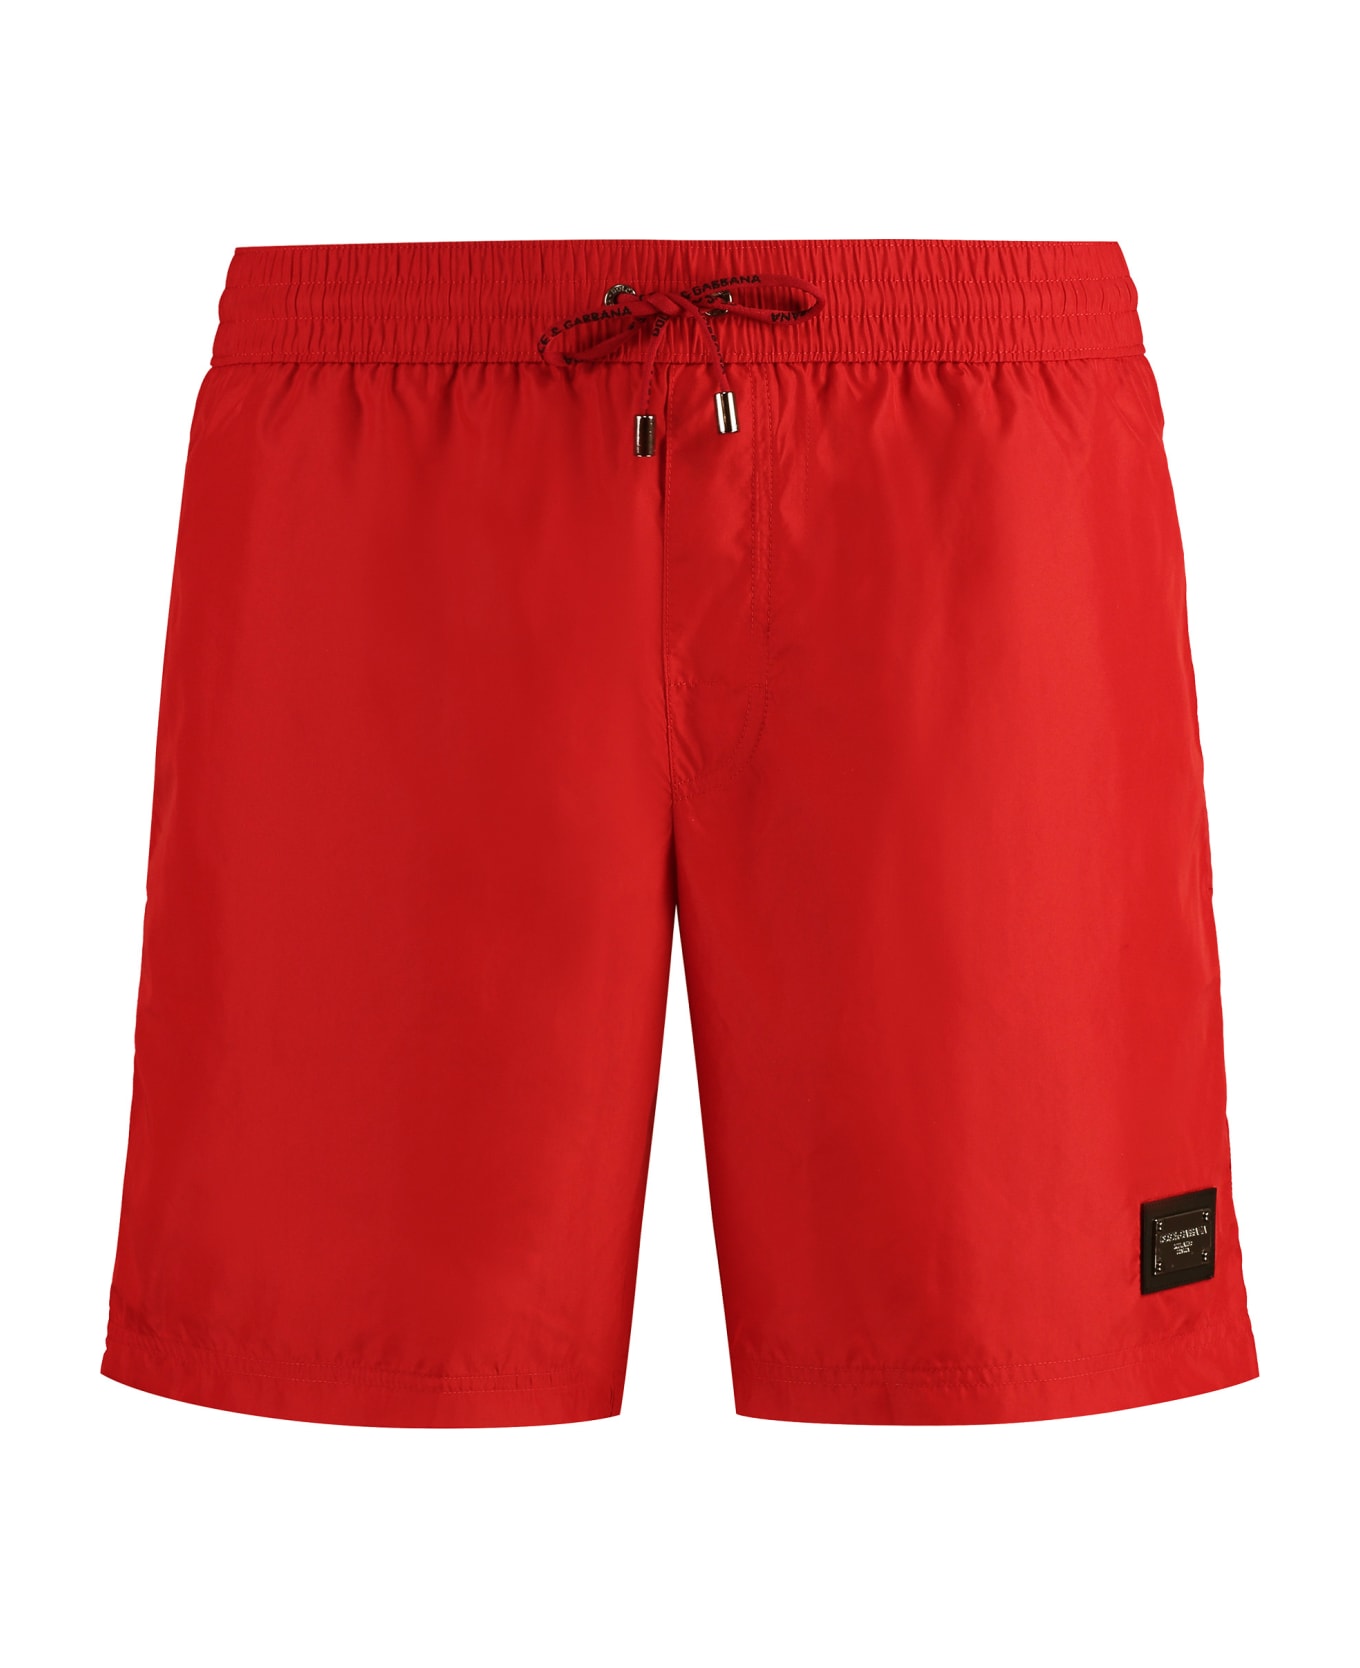 Dolce & Gabbana Nylon Swim Shorts - red